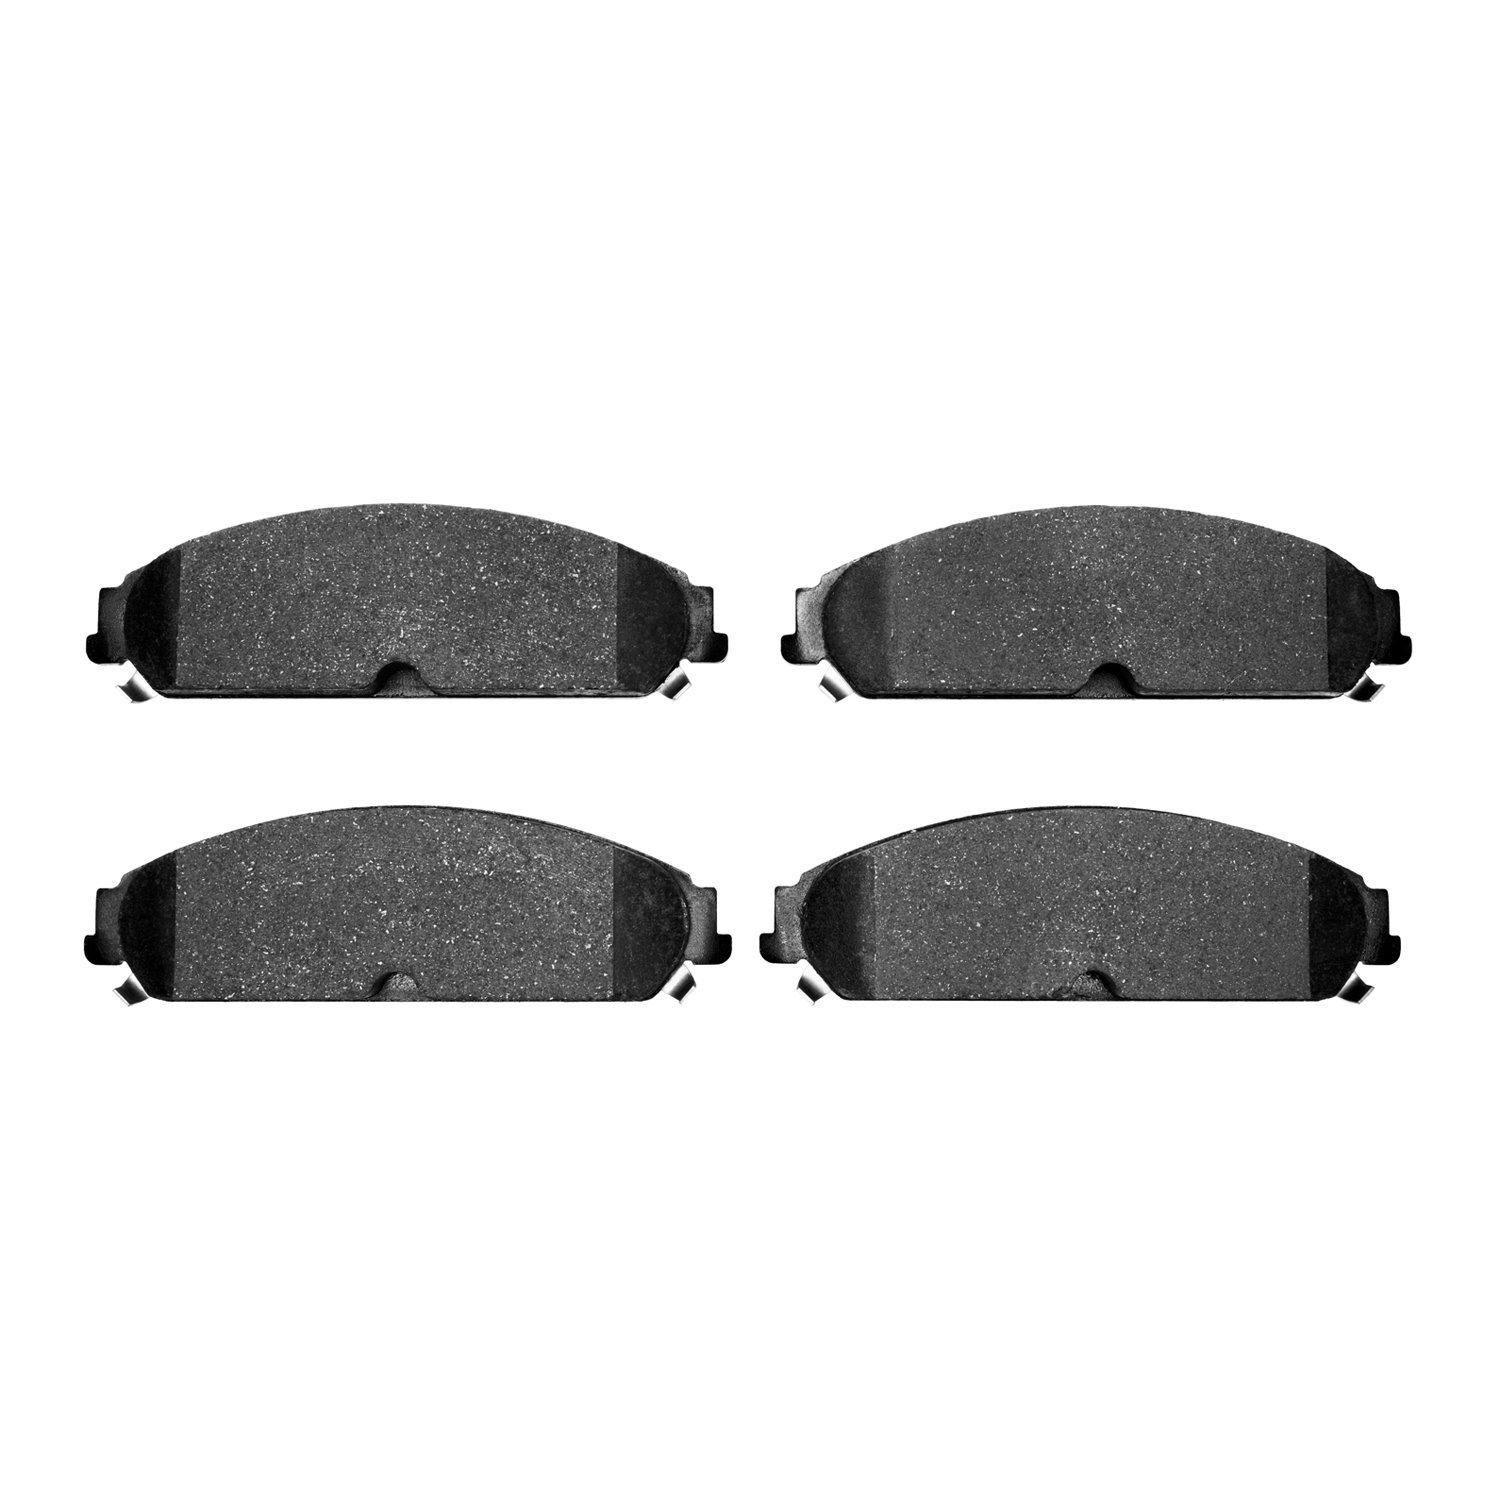 Ceramic Brake Pads, Fits Select Mopar, Position: Front